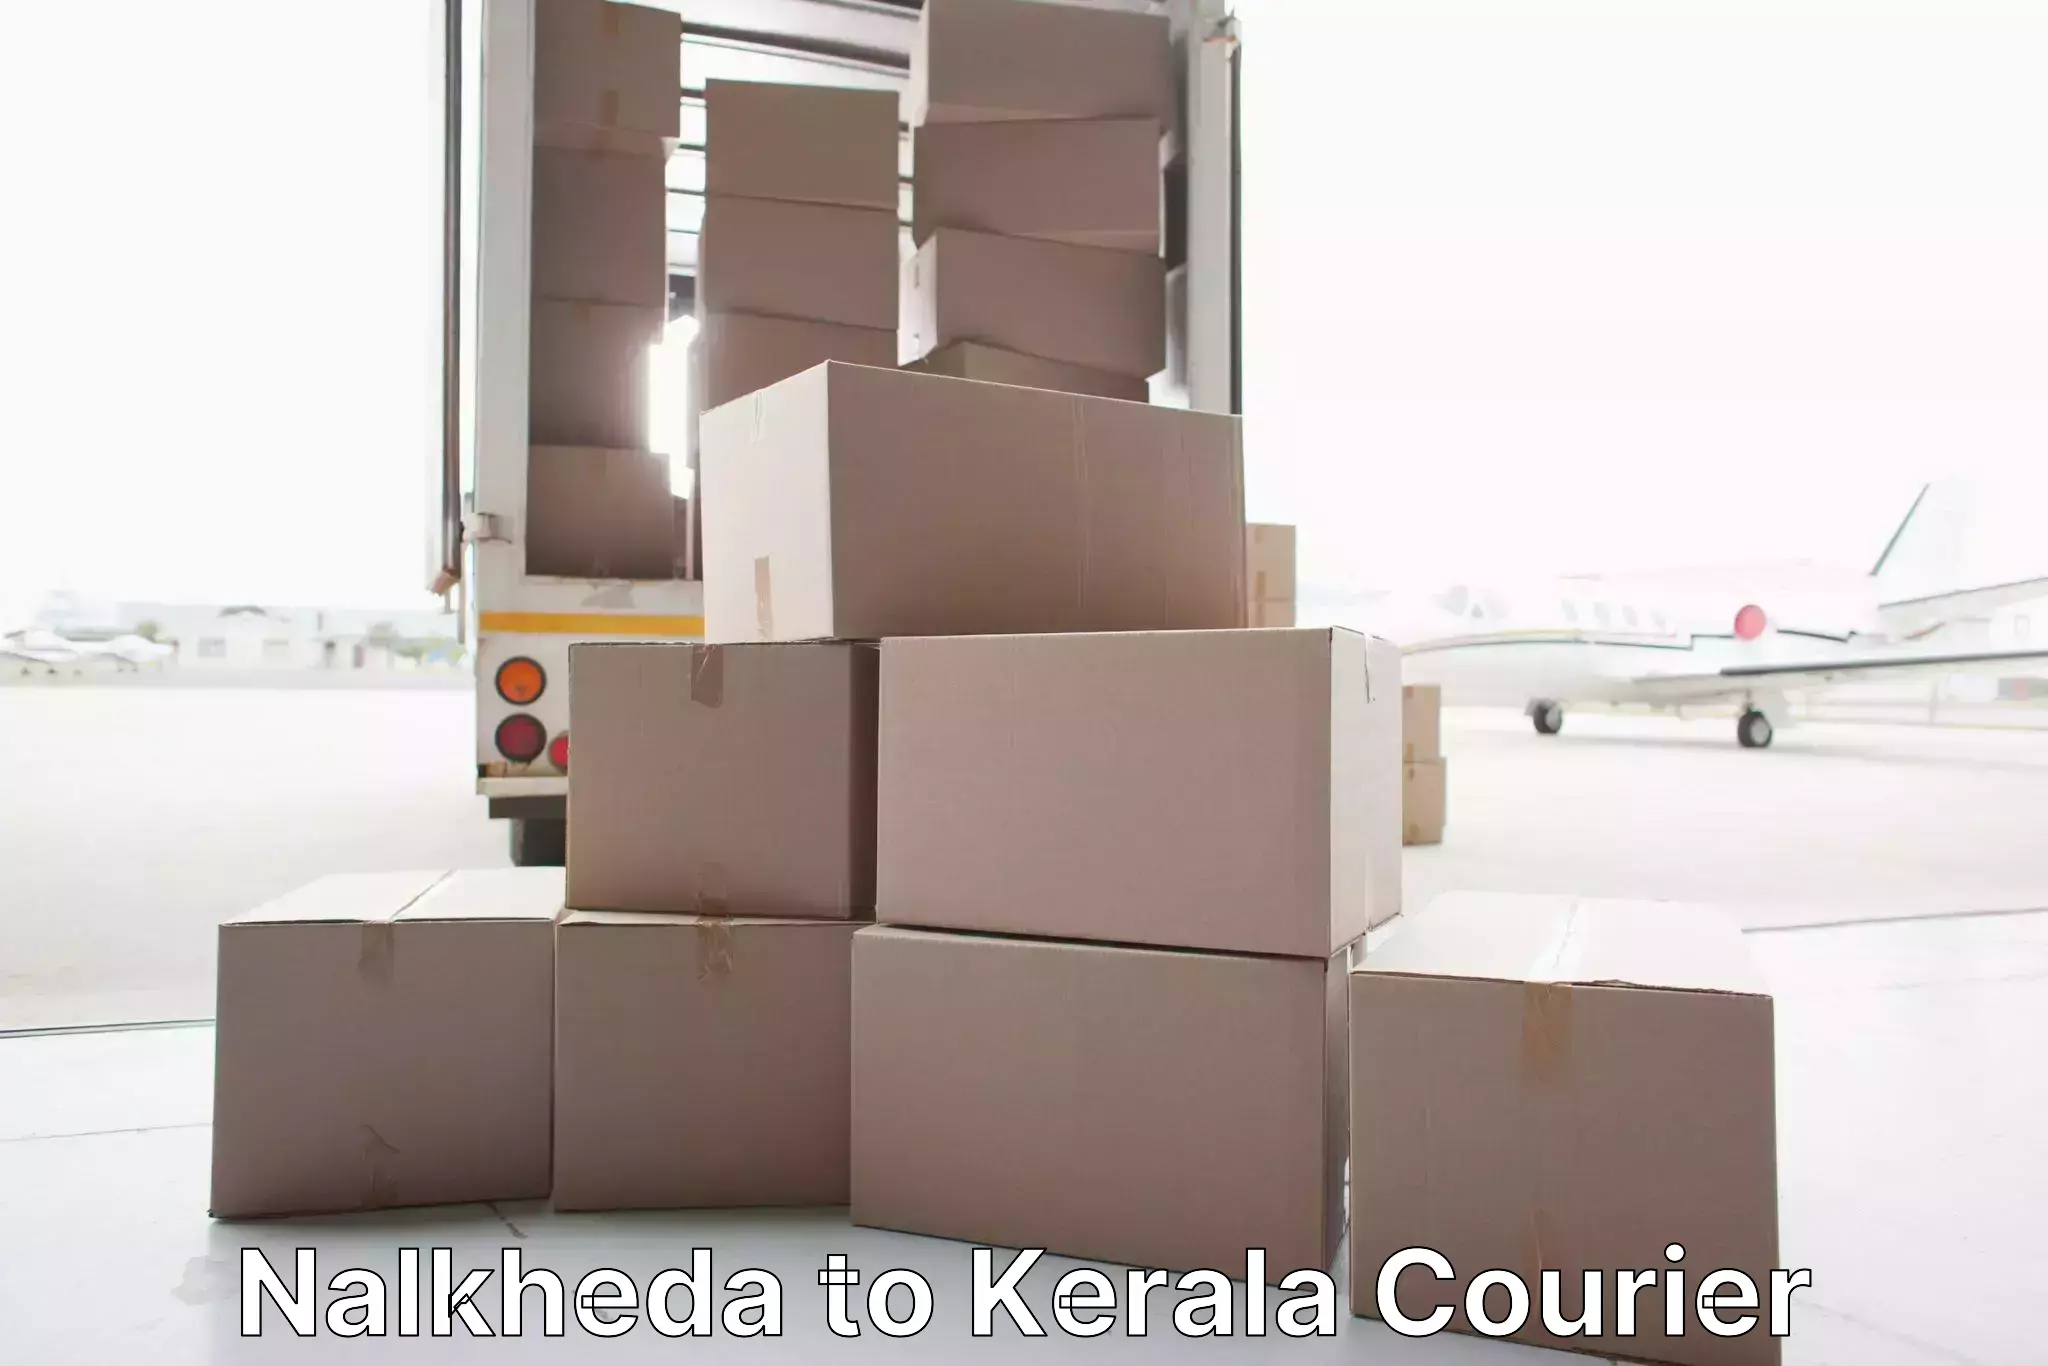 Quality moving company Nalkheda to Kerala